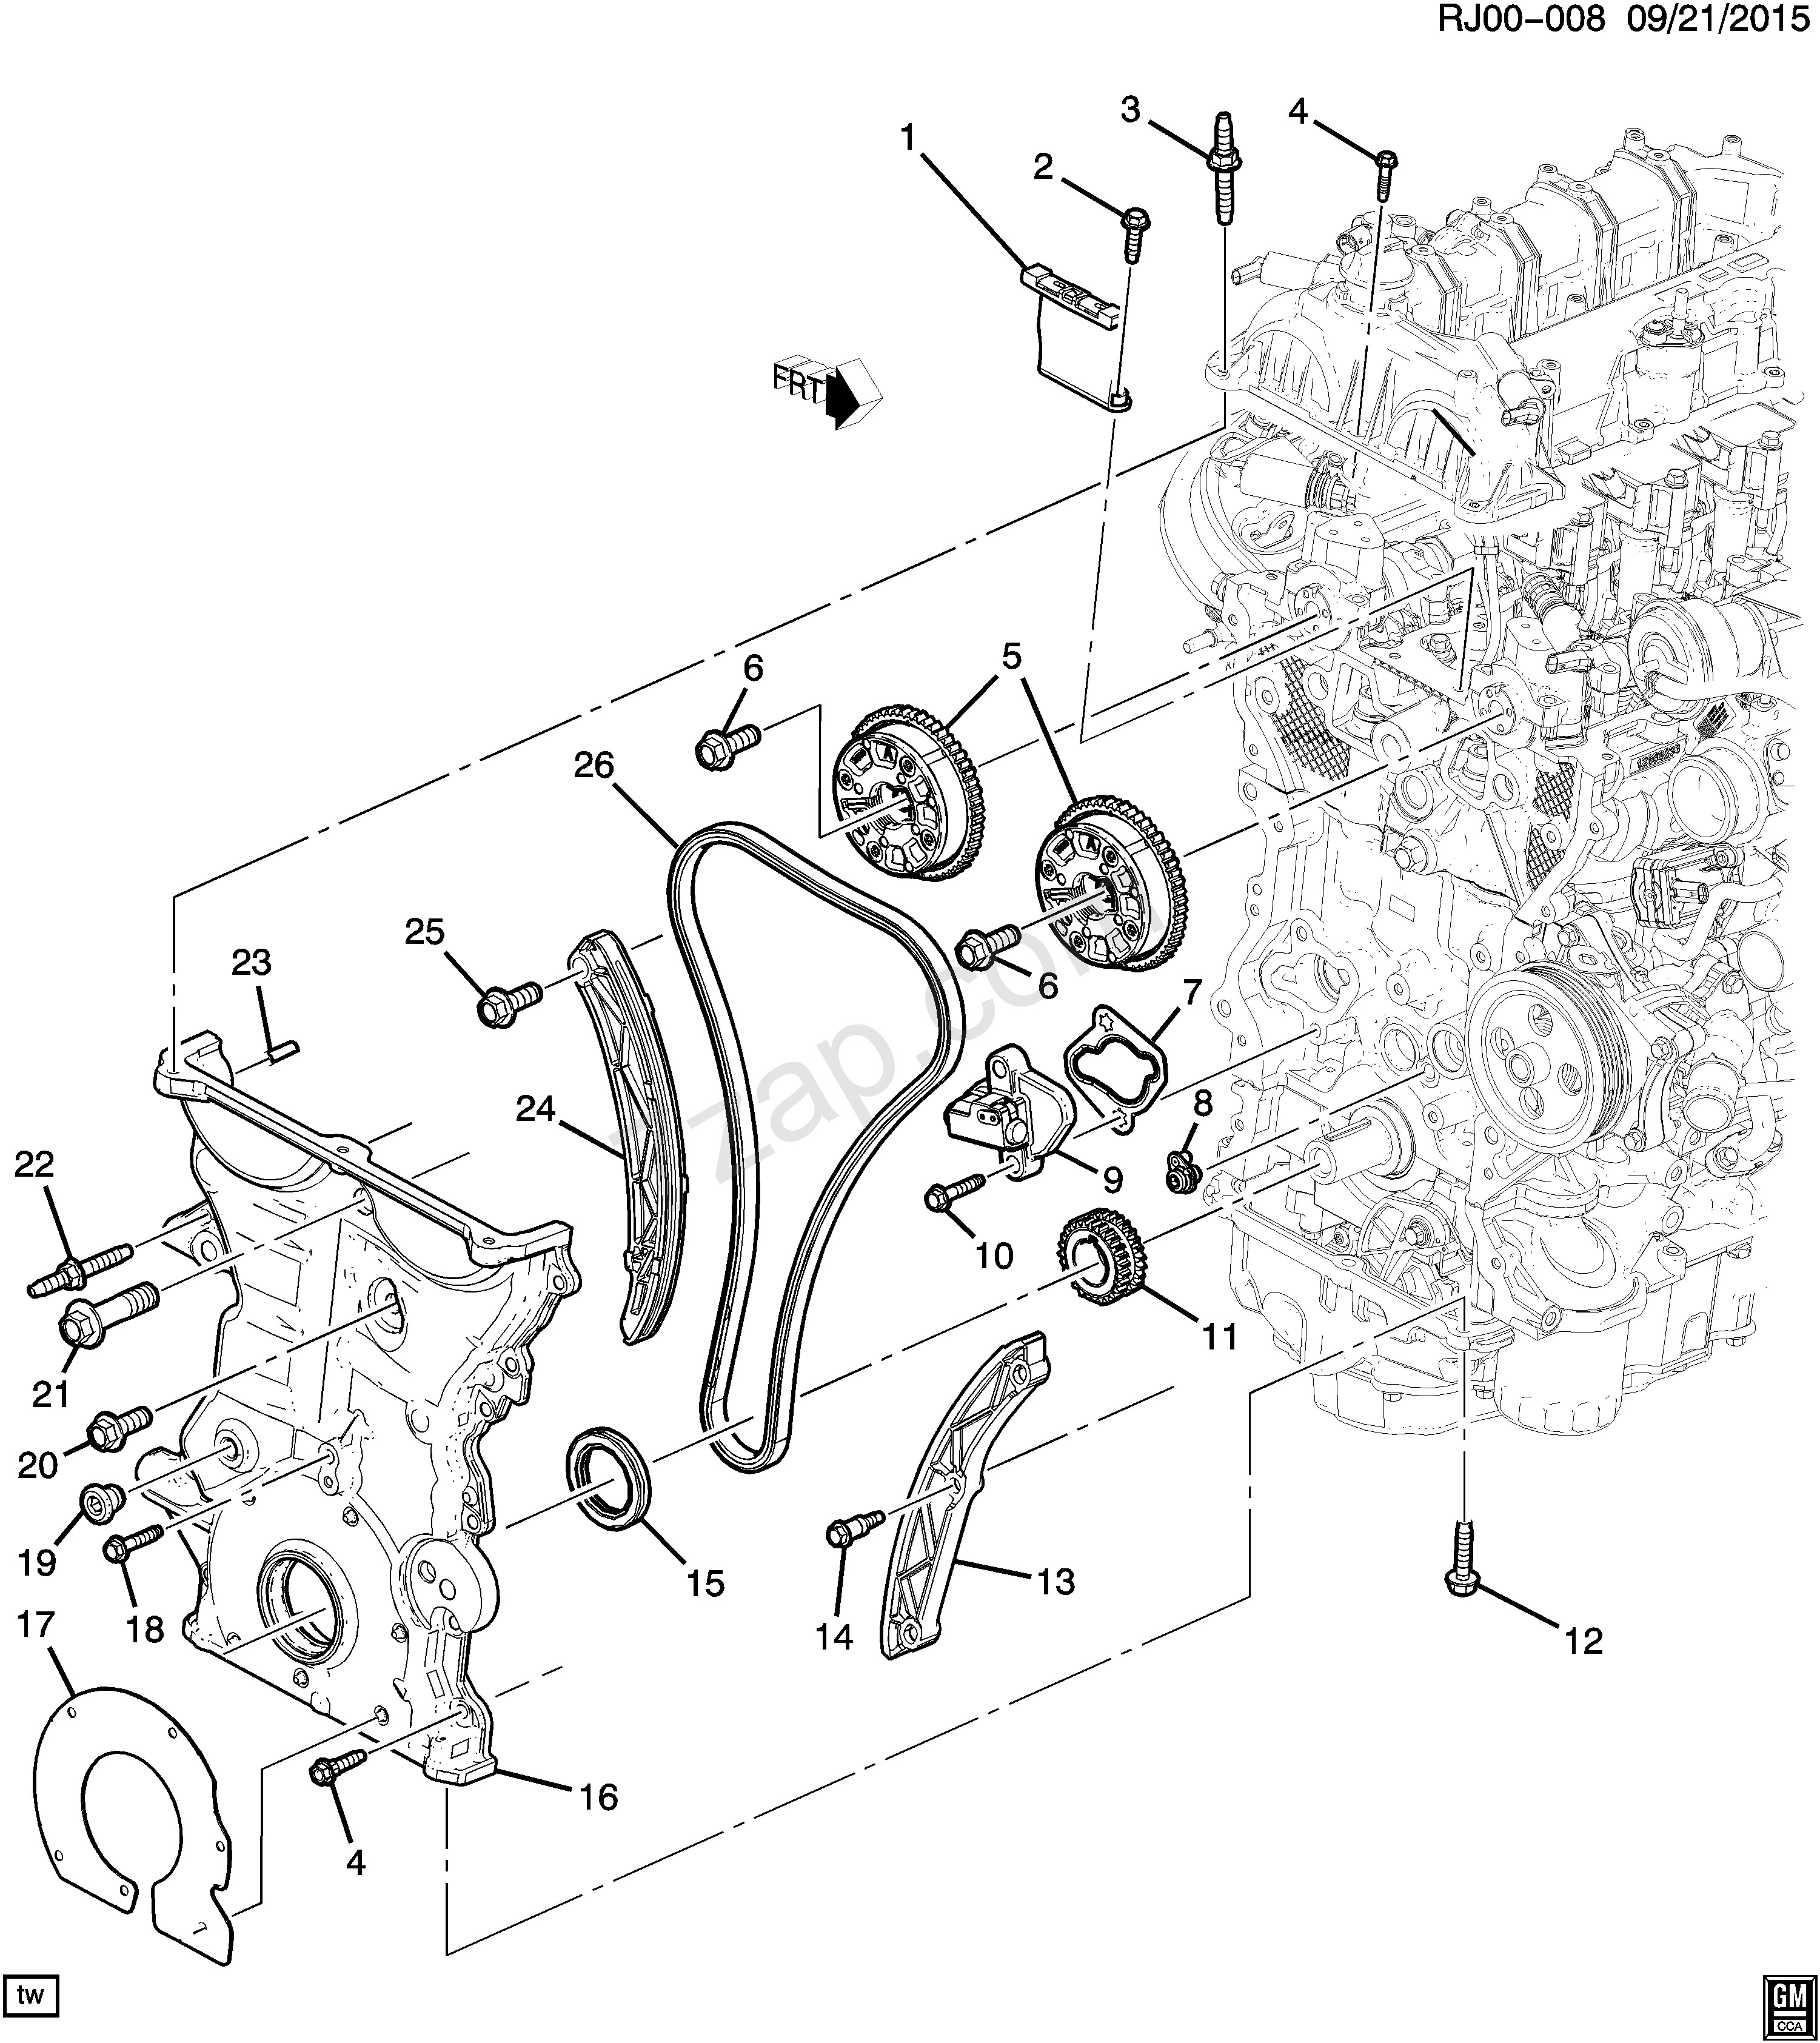 DA8255 2003 Chevy Malibu Engine Diagram | Ebook Databases